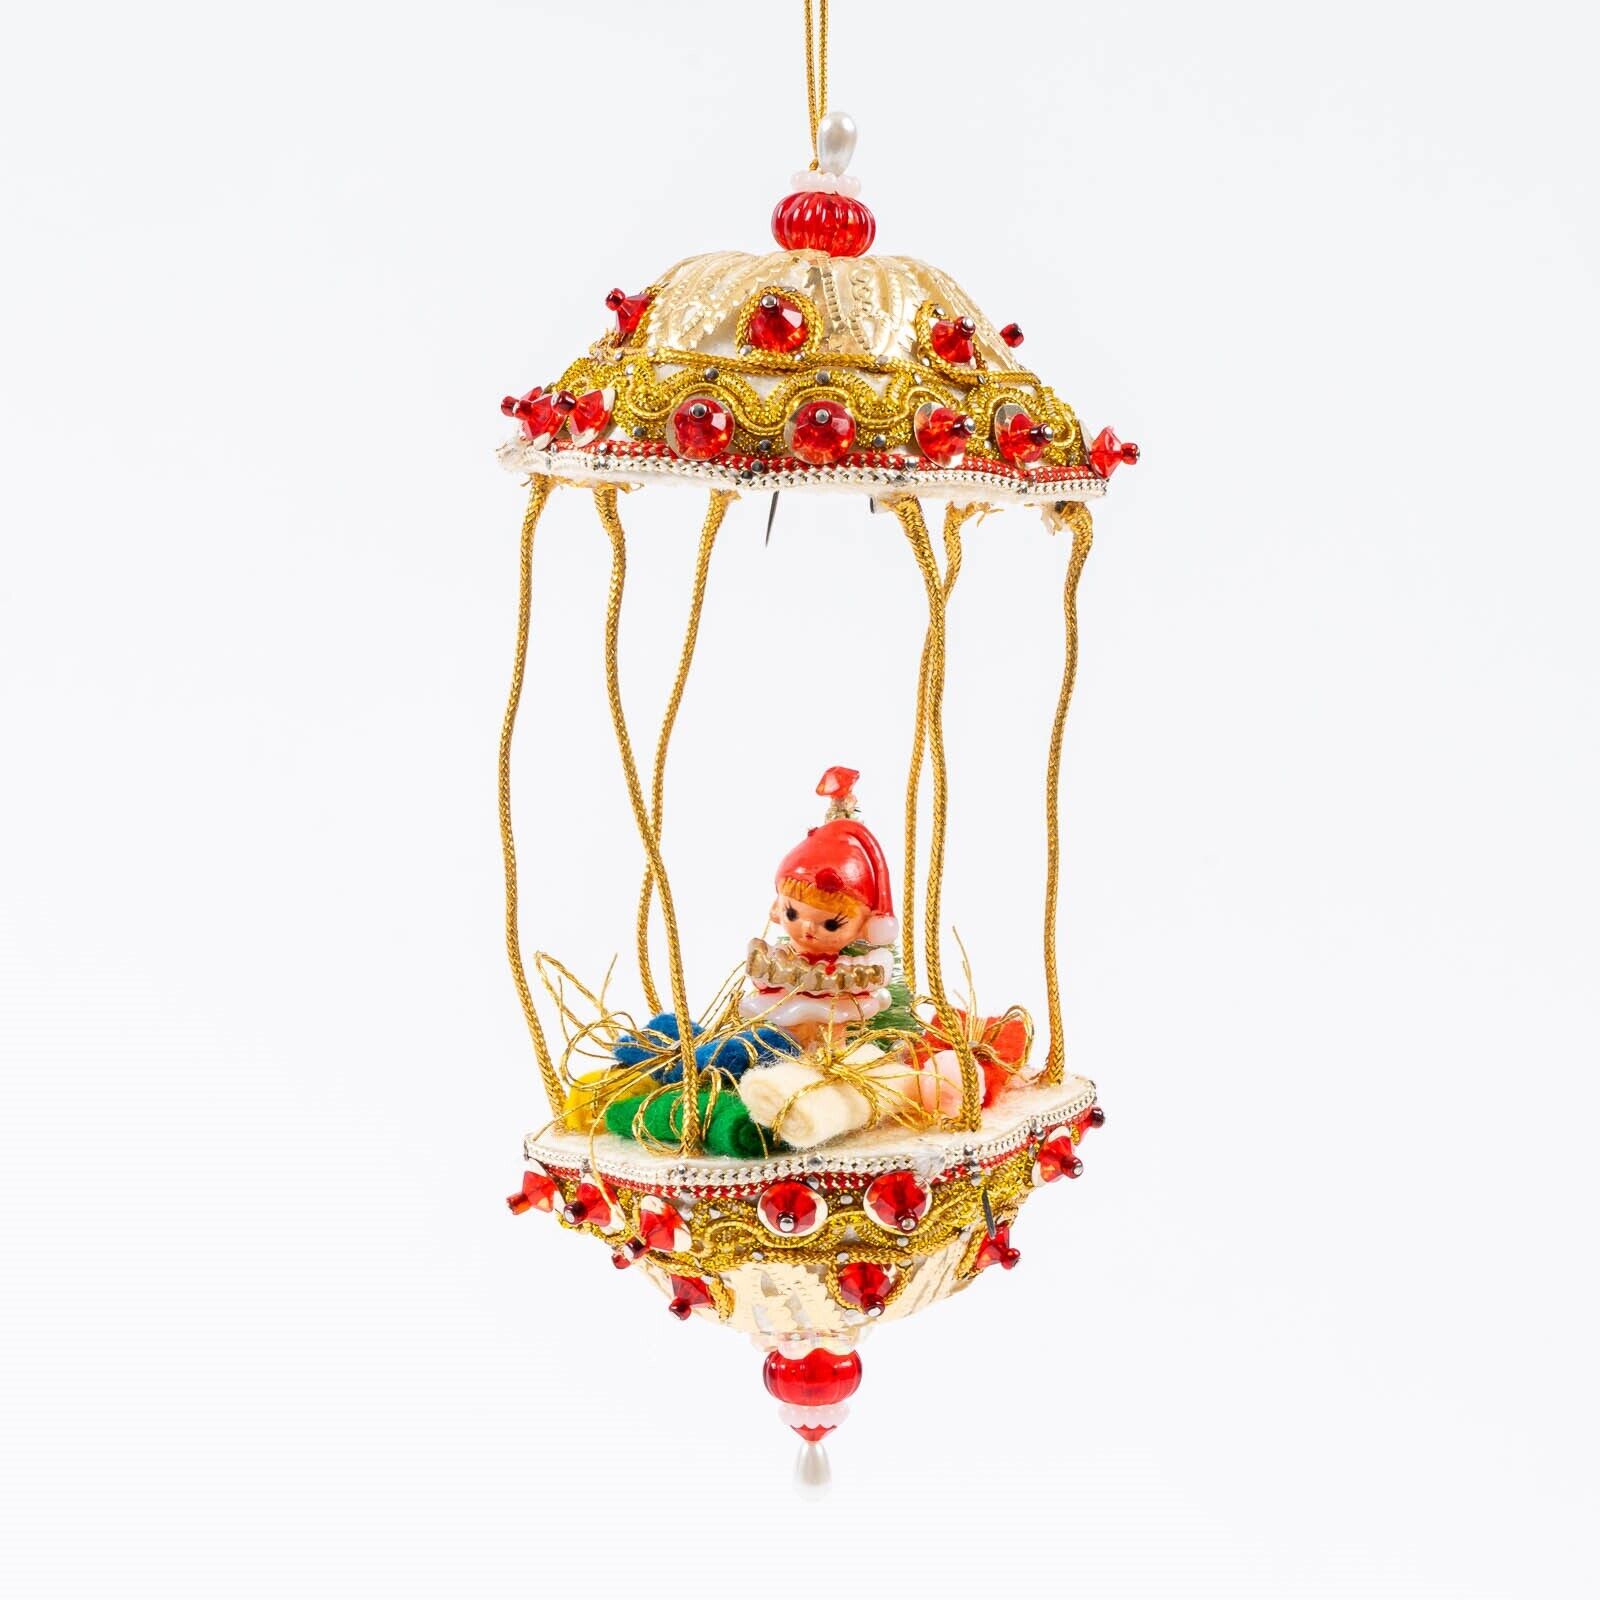 Leewards Christmas Carousel Ornament Handmade Beads Sequins Elf Presents Vintage